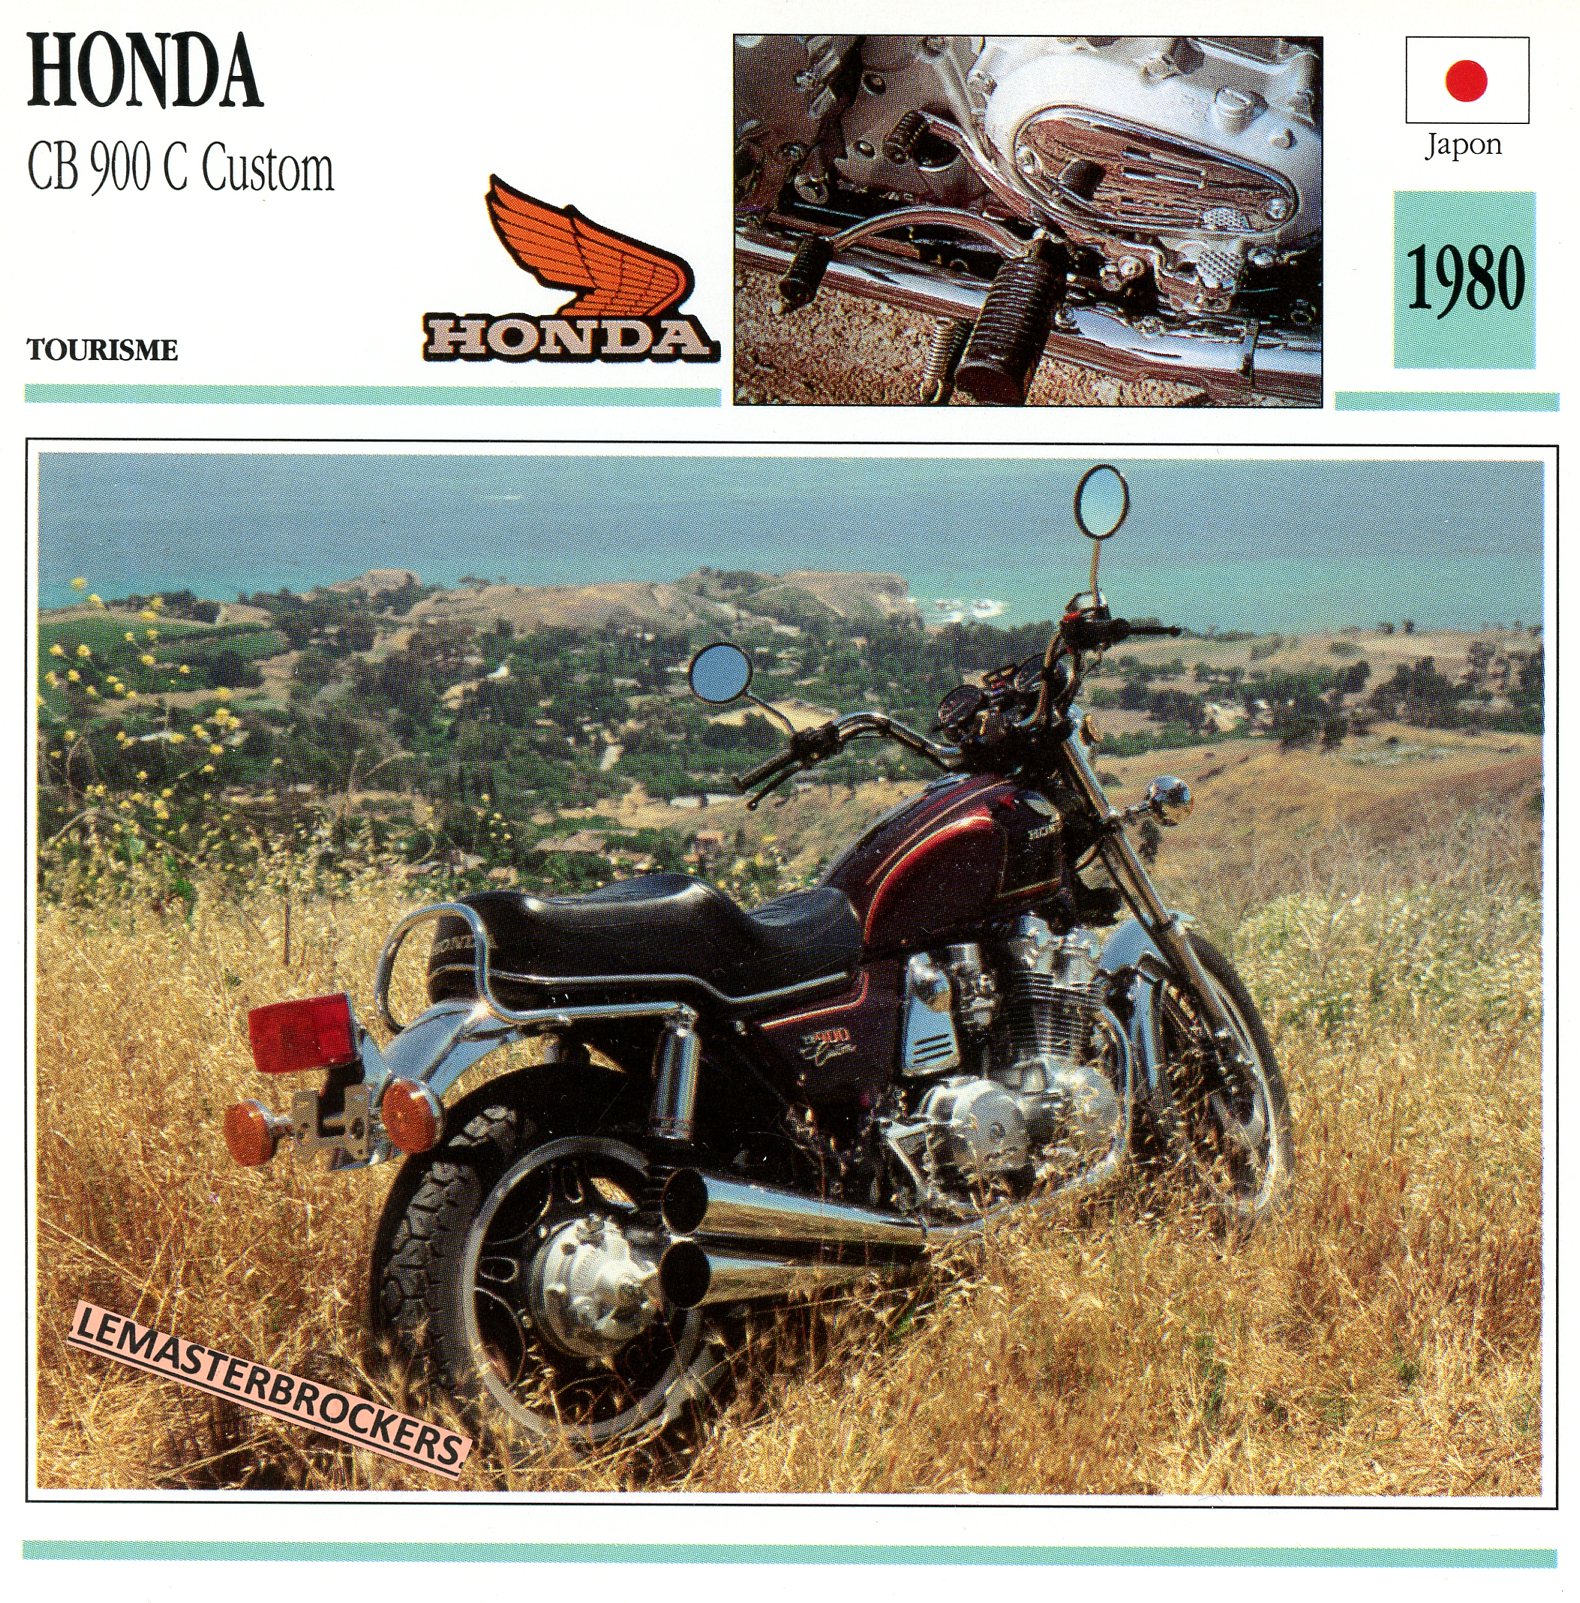 FICHE-MOTO-HONDA-CB-CB900-1980-LEMASTERBROCKERS-CARS-MOTORCYCLE